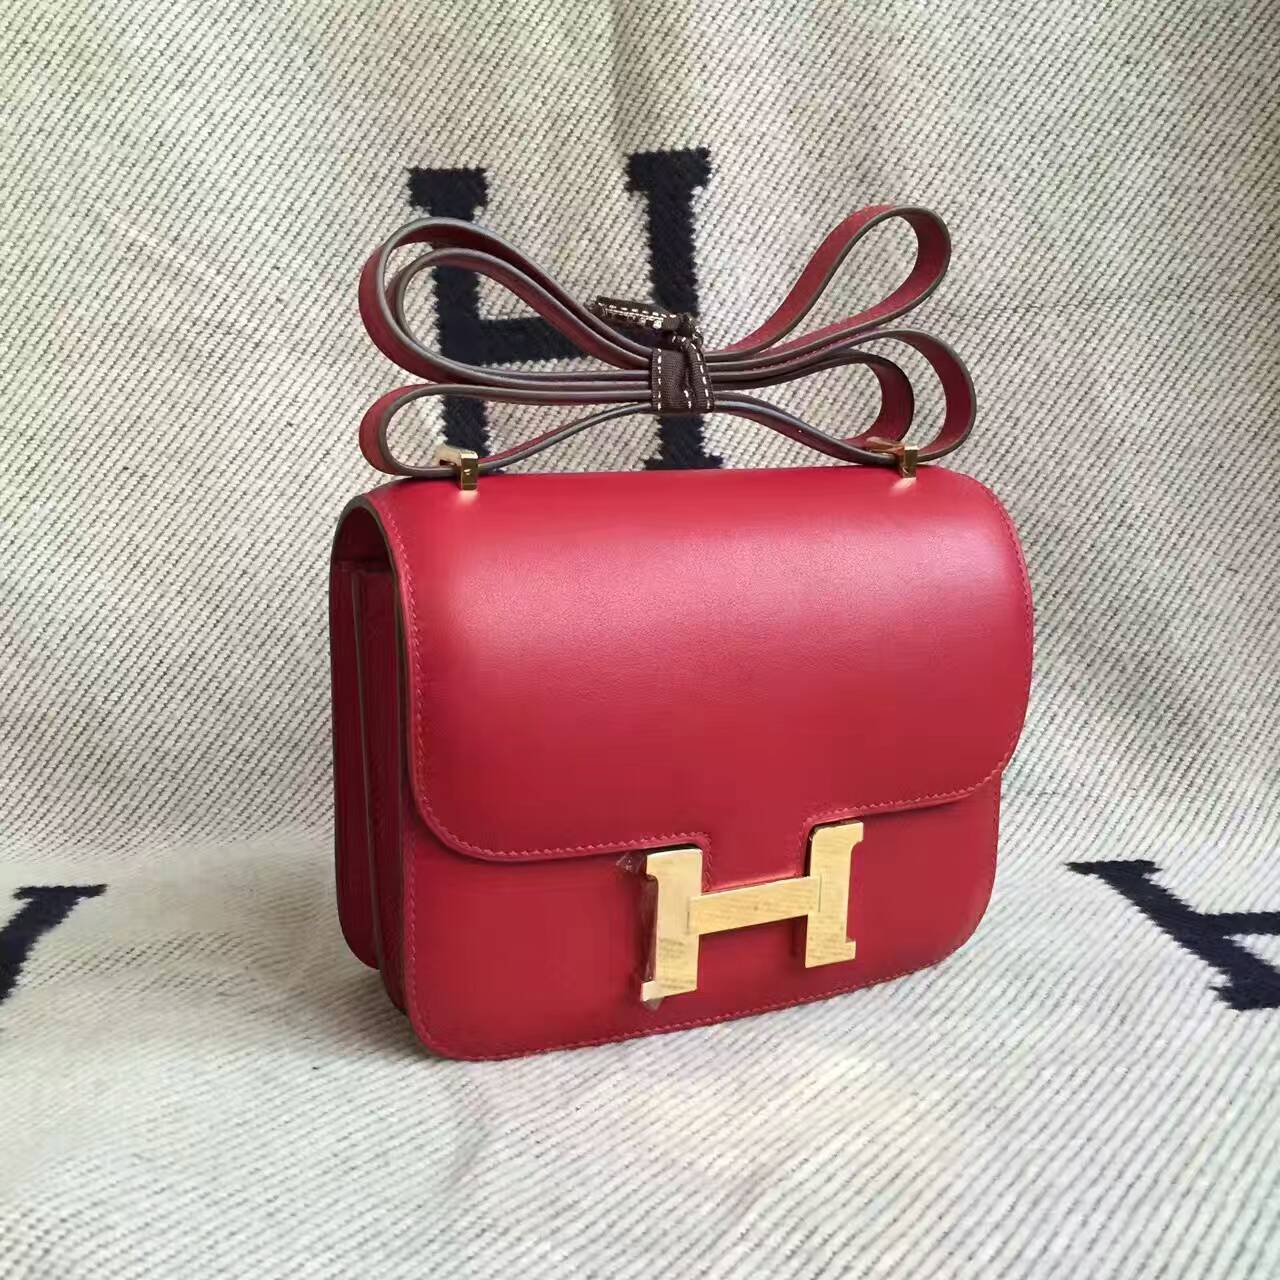 Discount Hermes K1 Rouge Grenade Swift Leather Constance Bag19cm